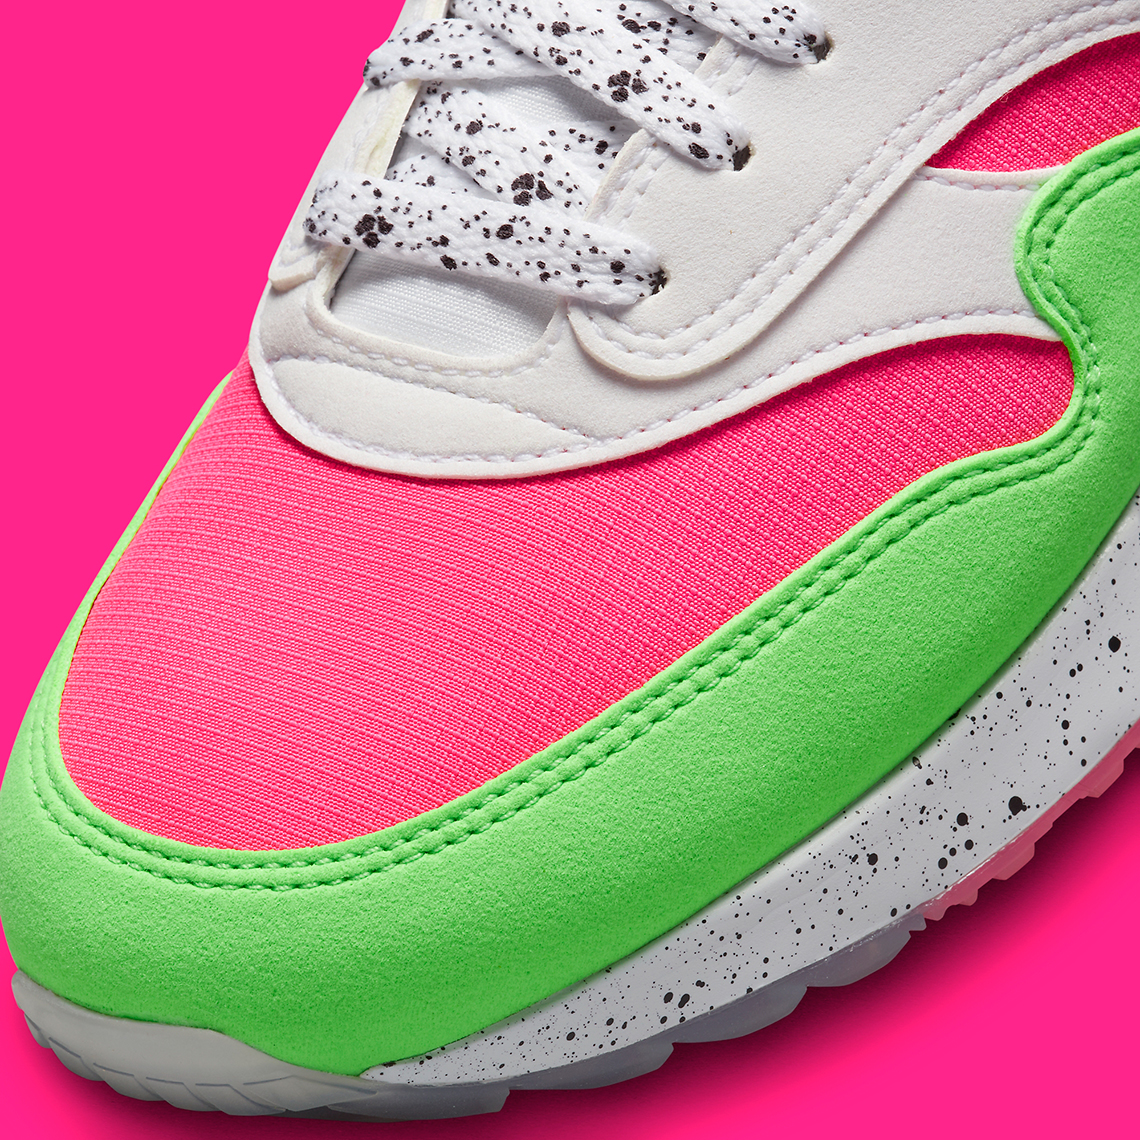 Nike nike hypervenom white rainbow sneakers blue color Golf Airbrush Green Pink 11